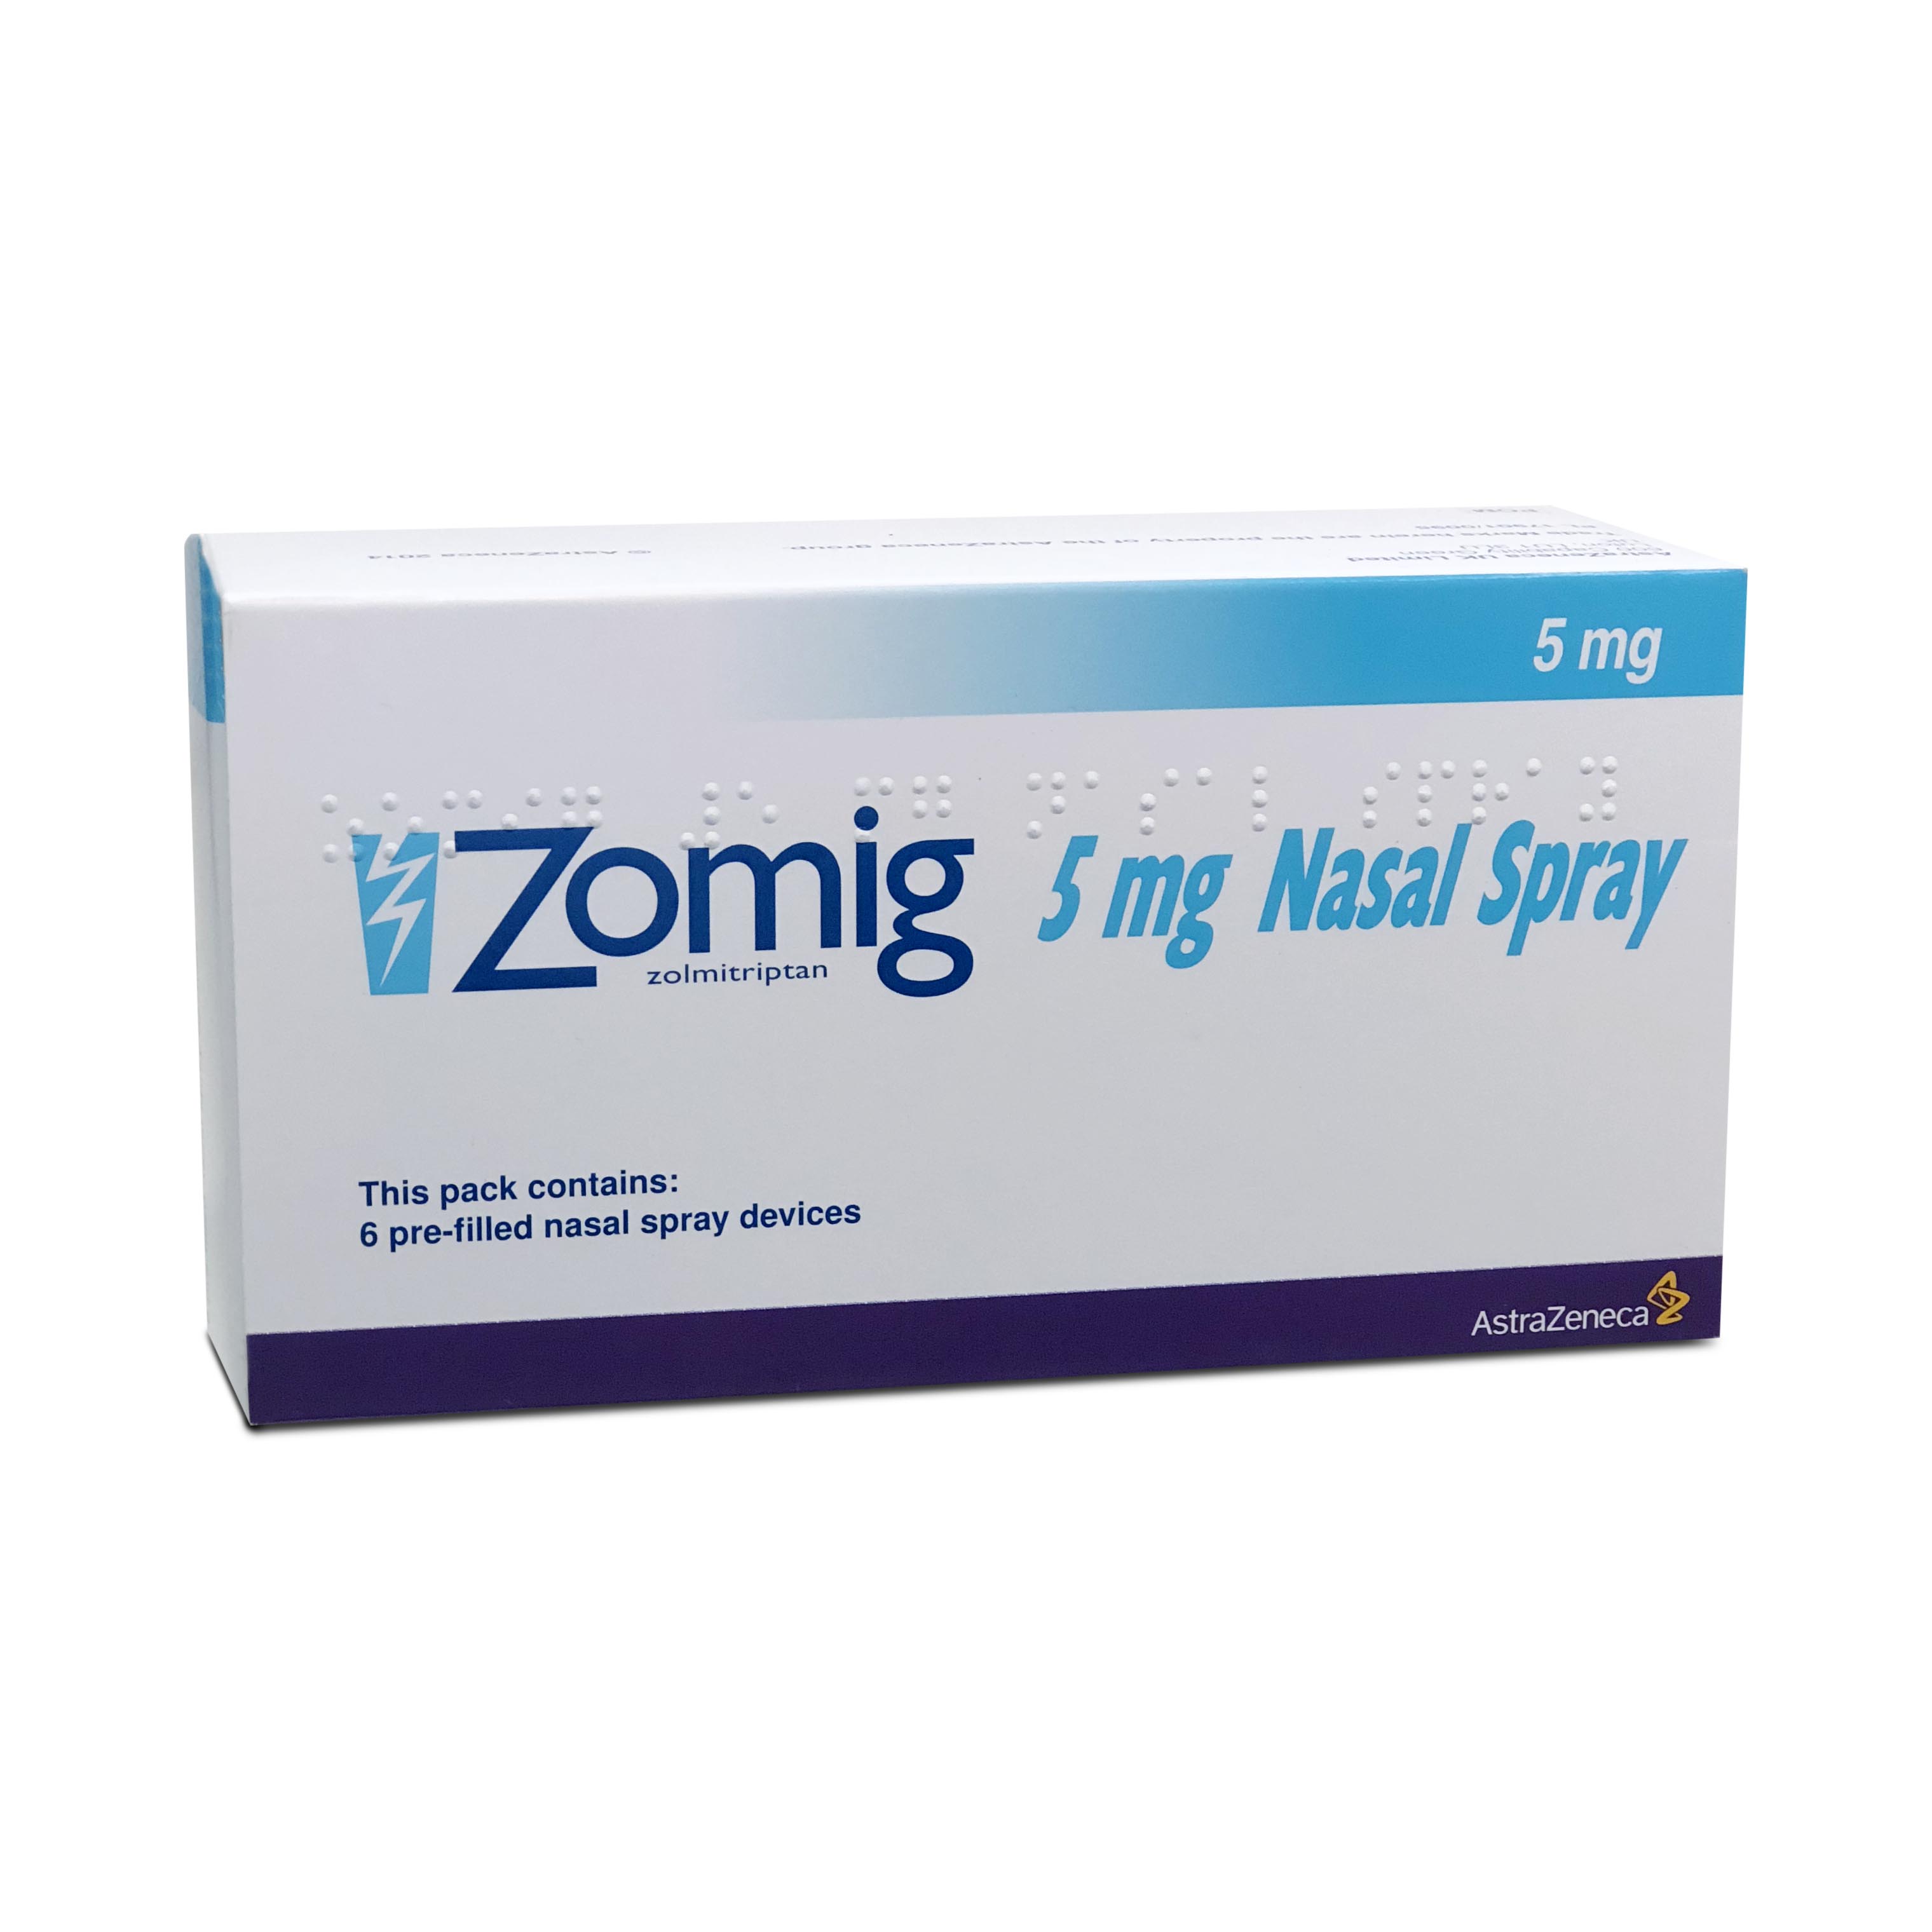 Zomig Nasal Spray 5mg manufactured by AstraZeneca